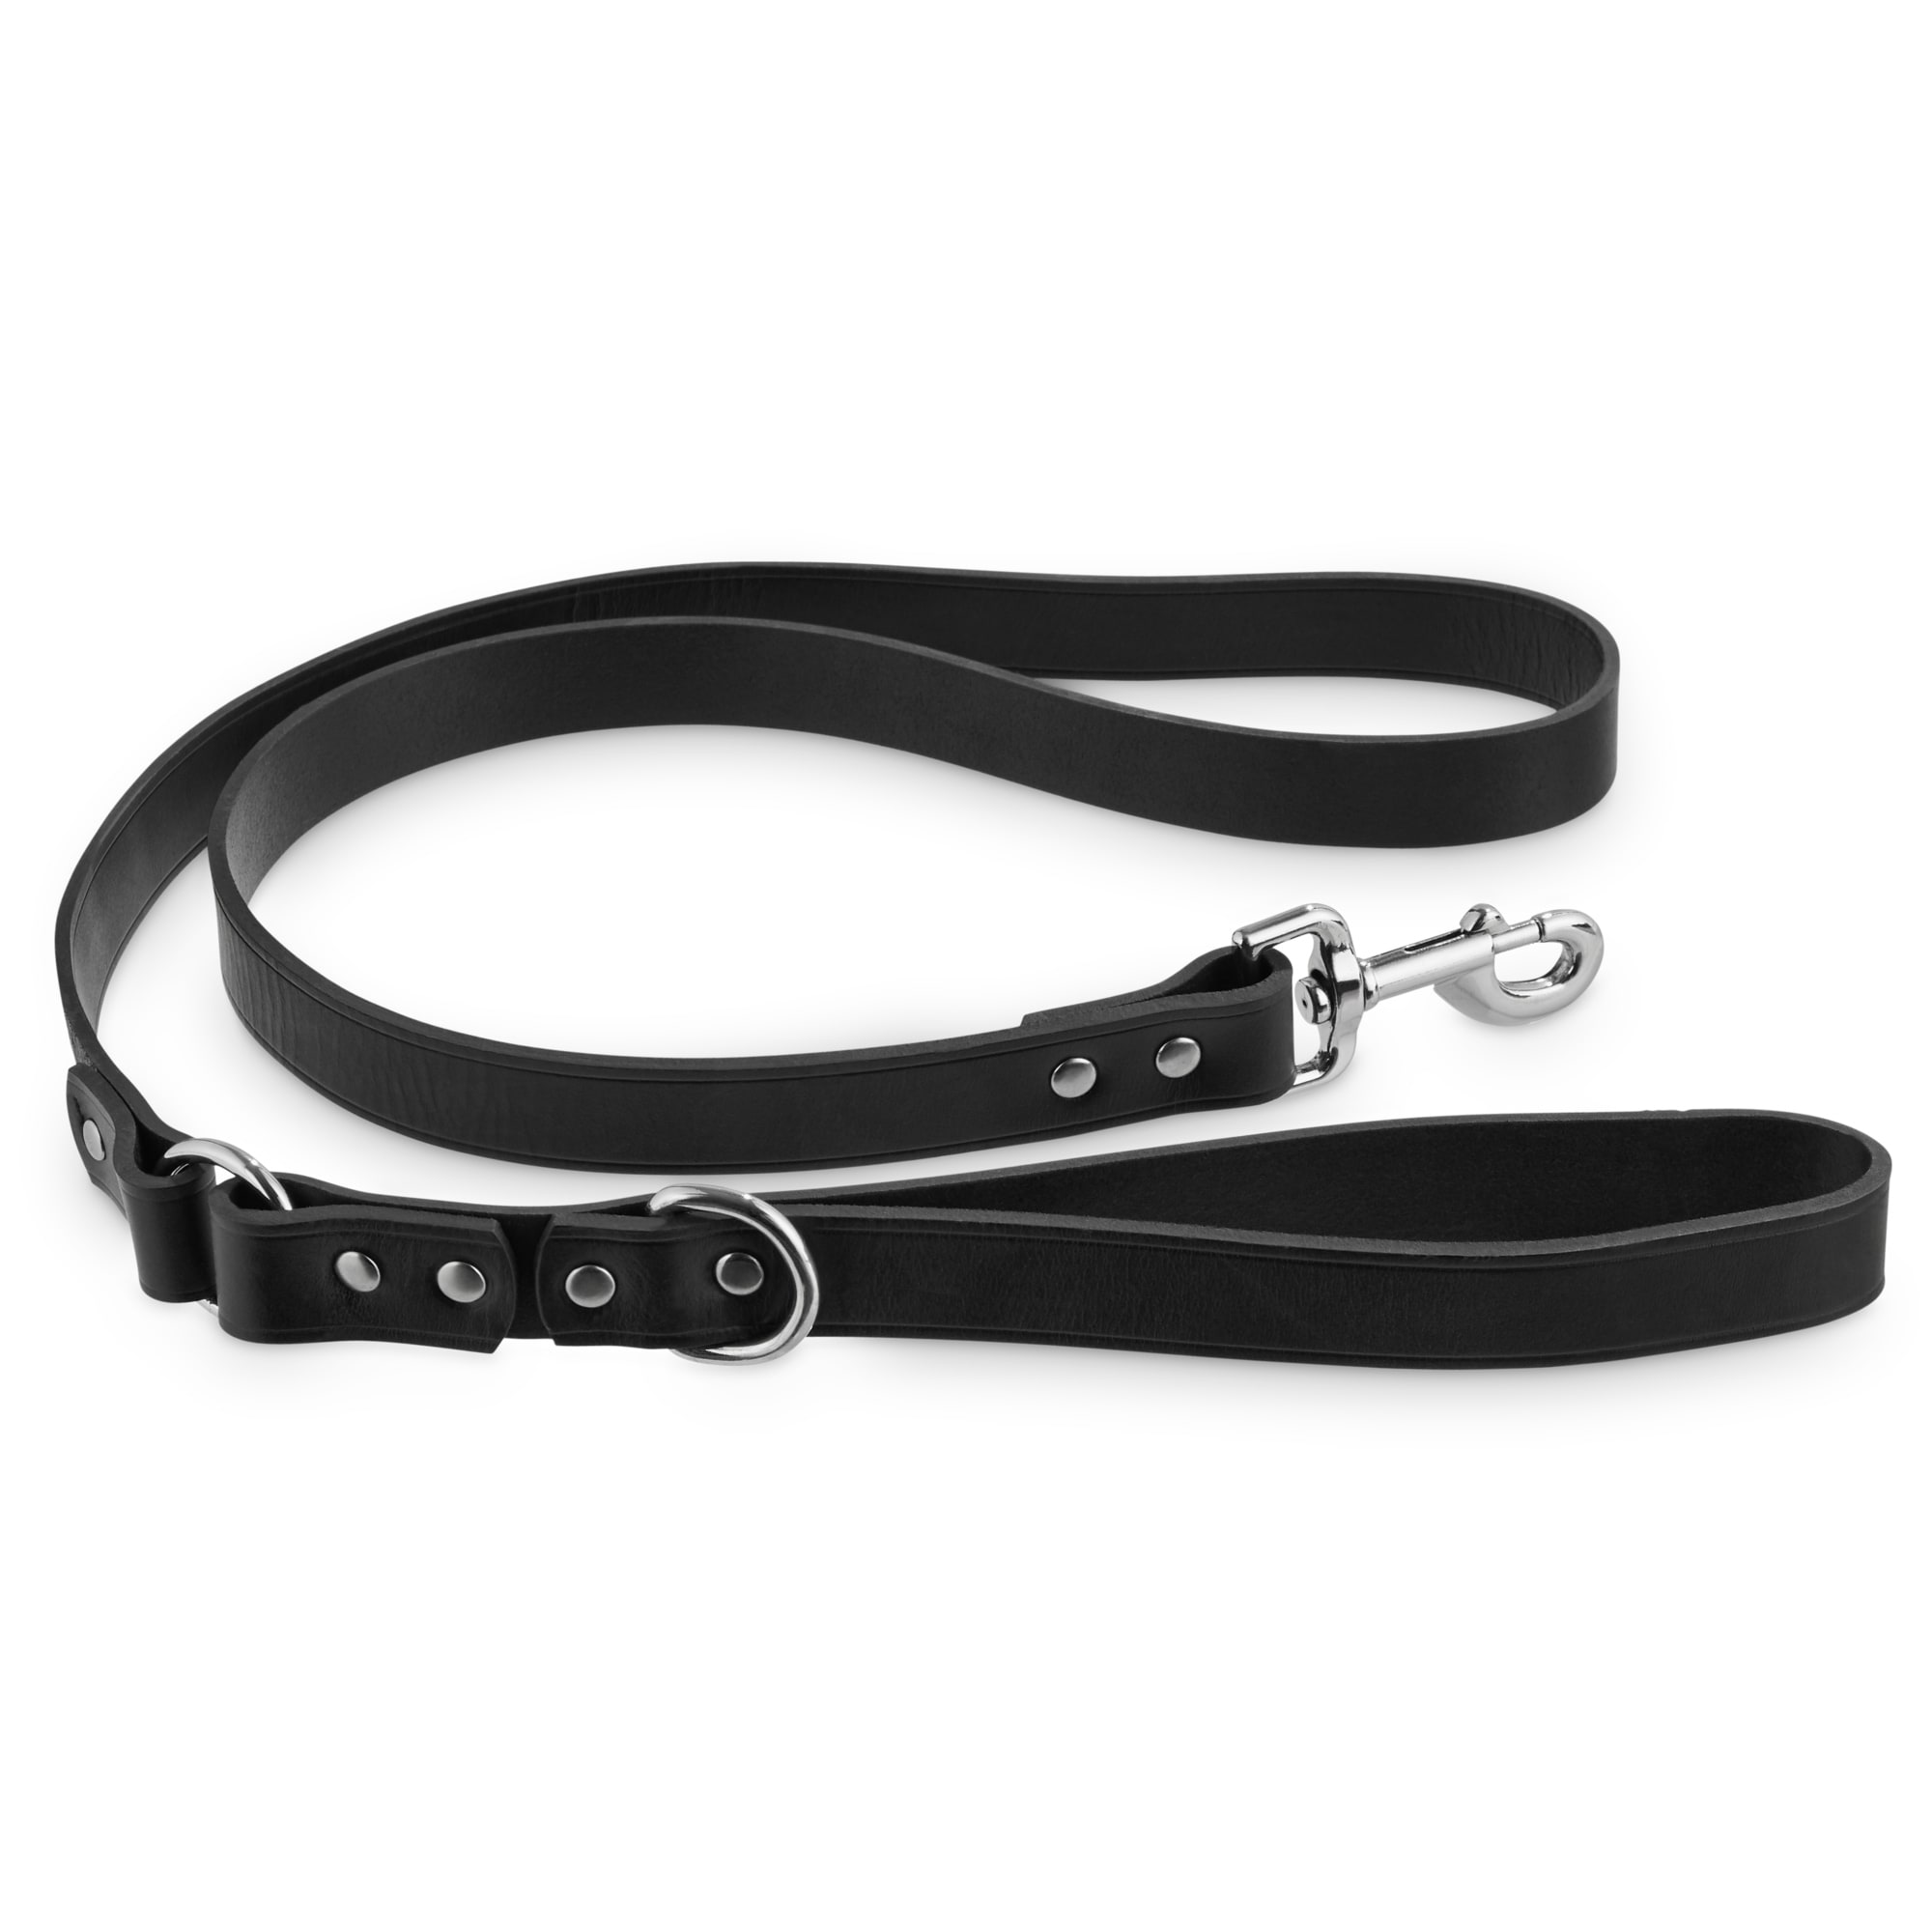 Bond \u0026 Co. Black Leather Dog Leash, 5 